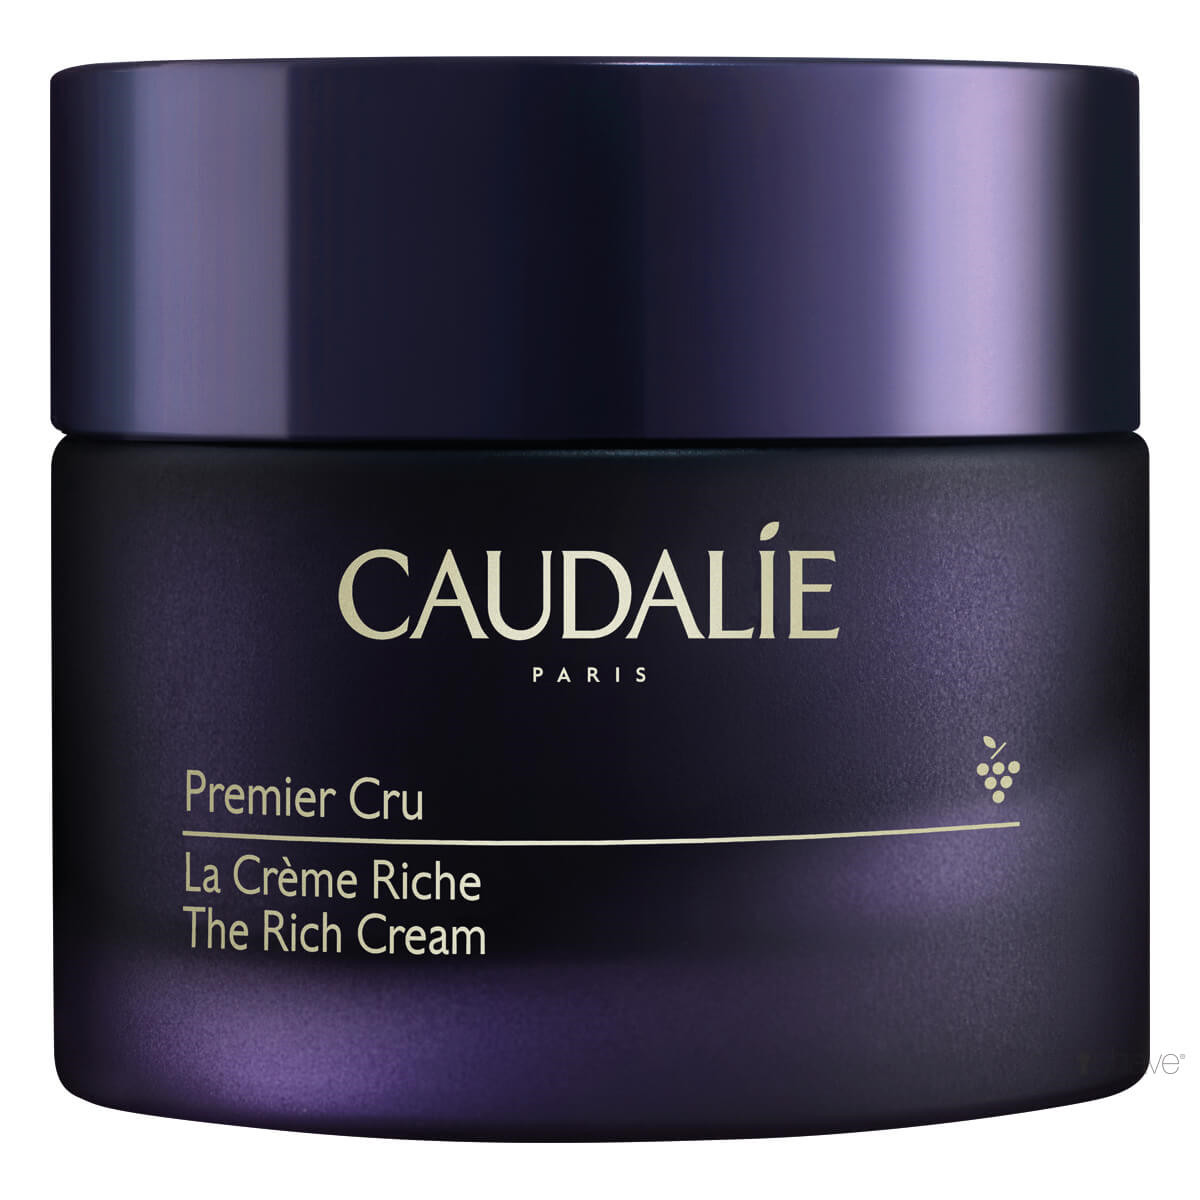 Billede af Caudalie Premier Cru, The Rich Cream, 50 ml.